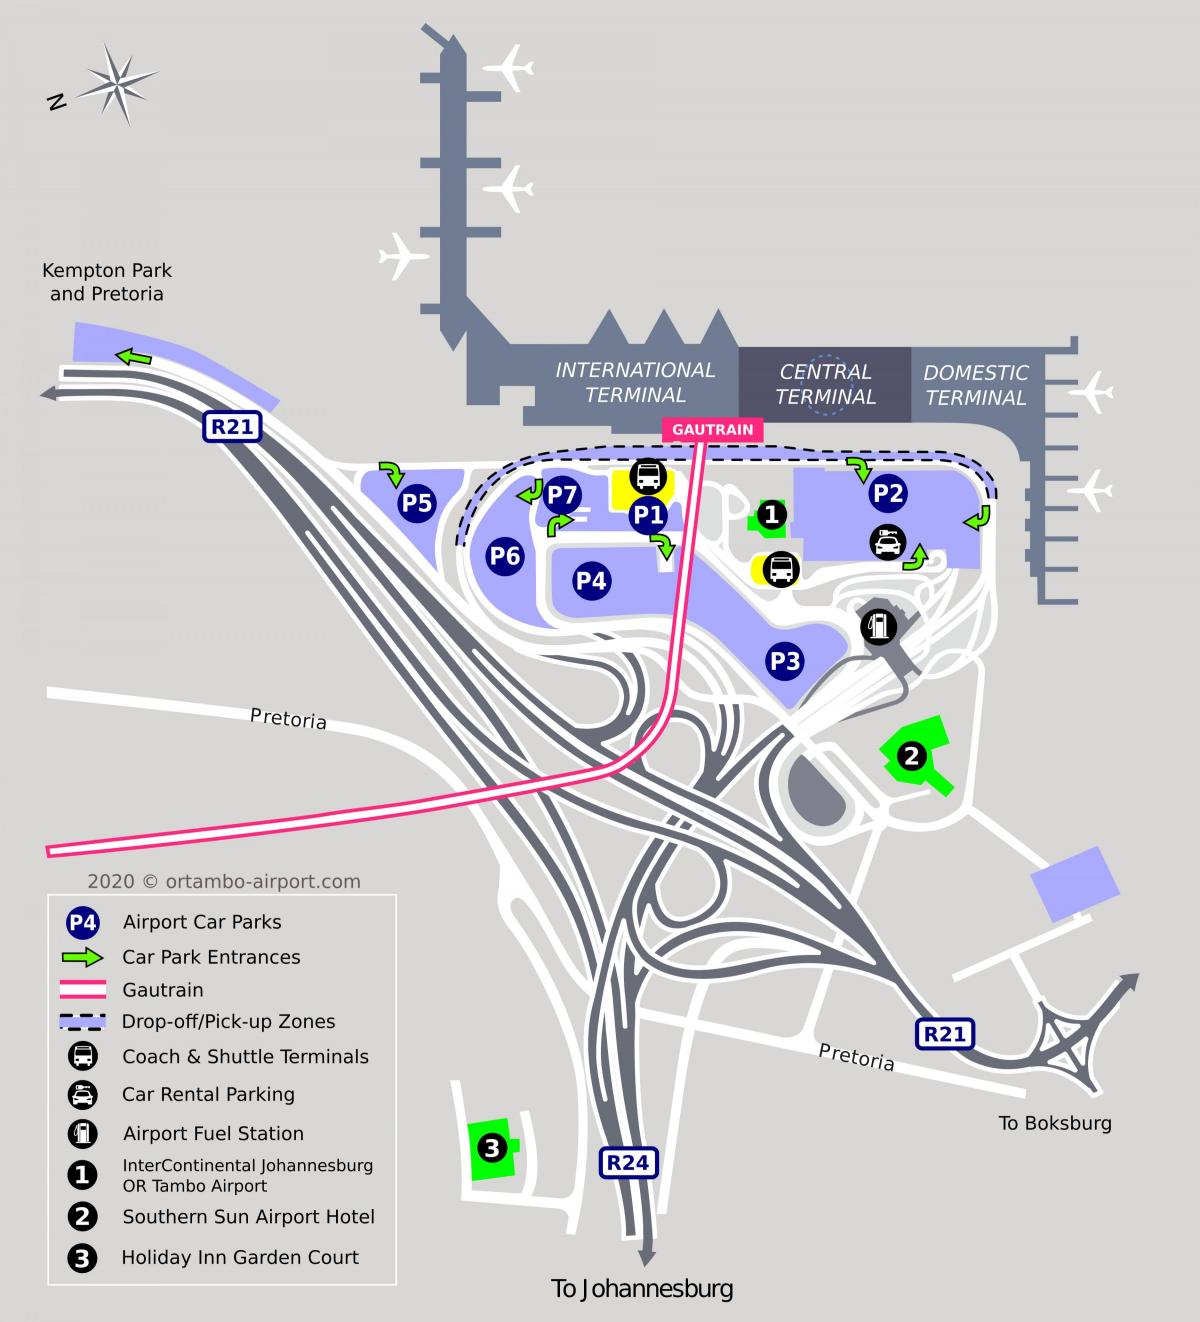 Mapa do terminal do aeroporto de Joanesburgo (Joburg Jozi)